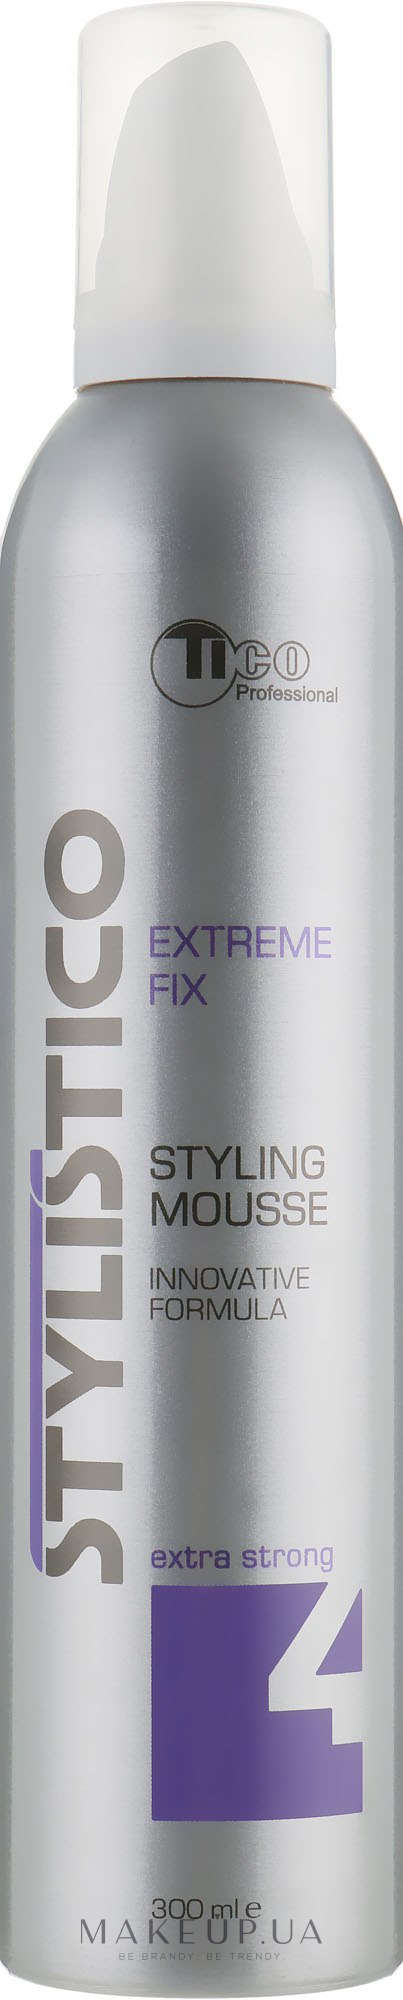 Мусс для волос экстра сильной фиксации - Tico Professional Stylistico Extreme Fix Hair Mousse — фото 300ml